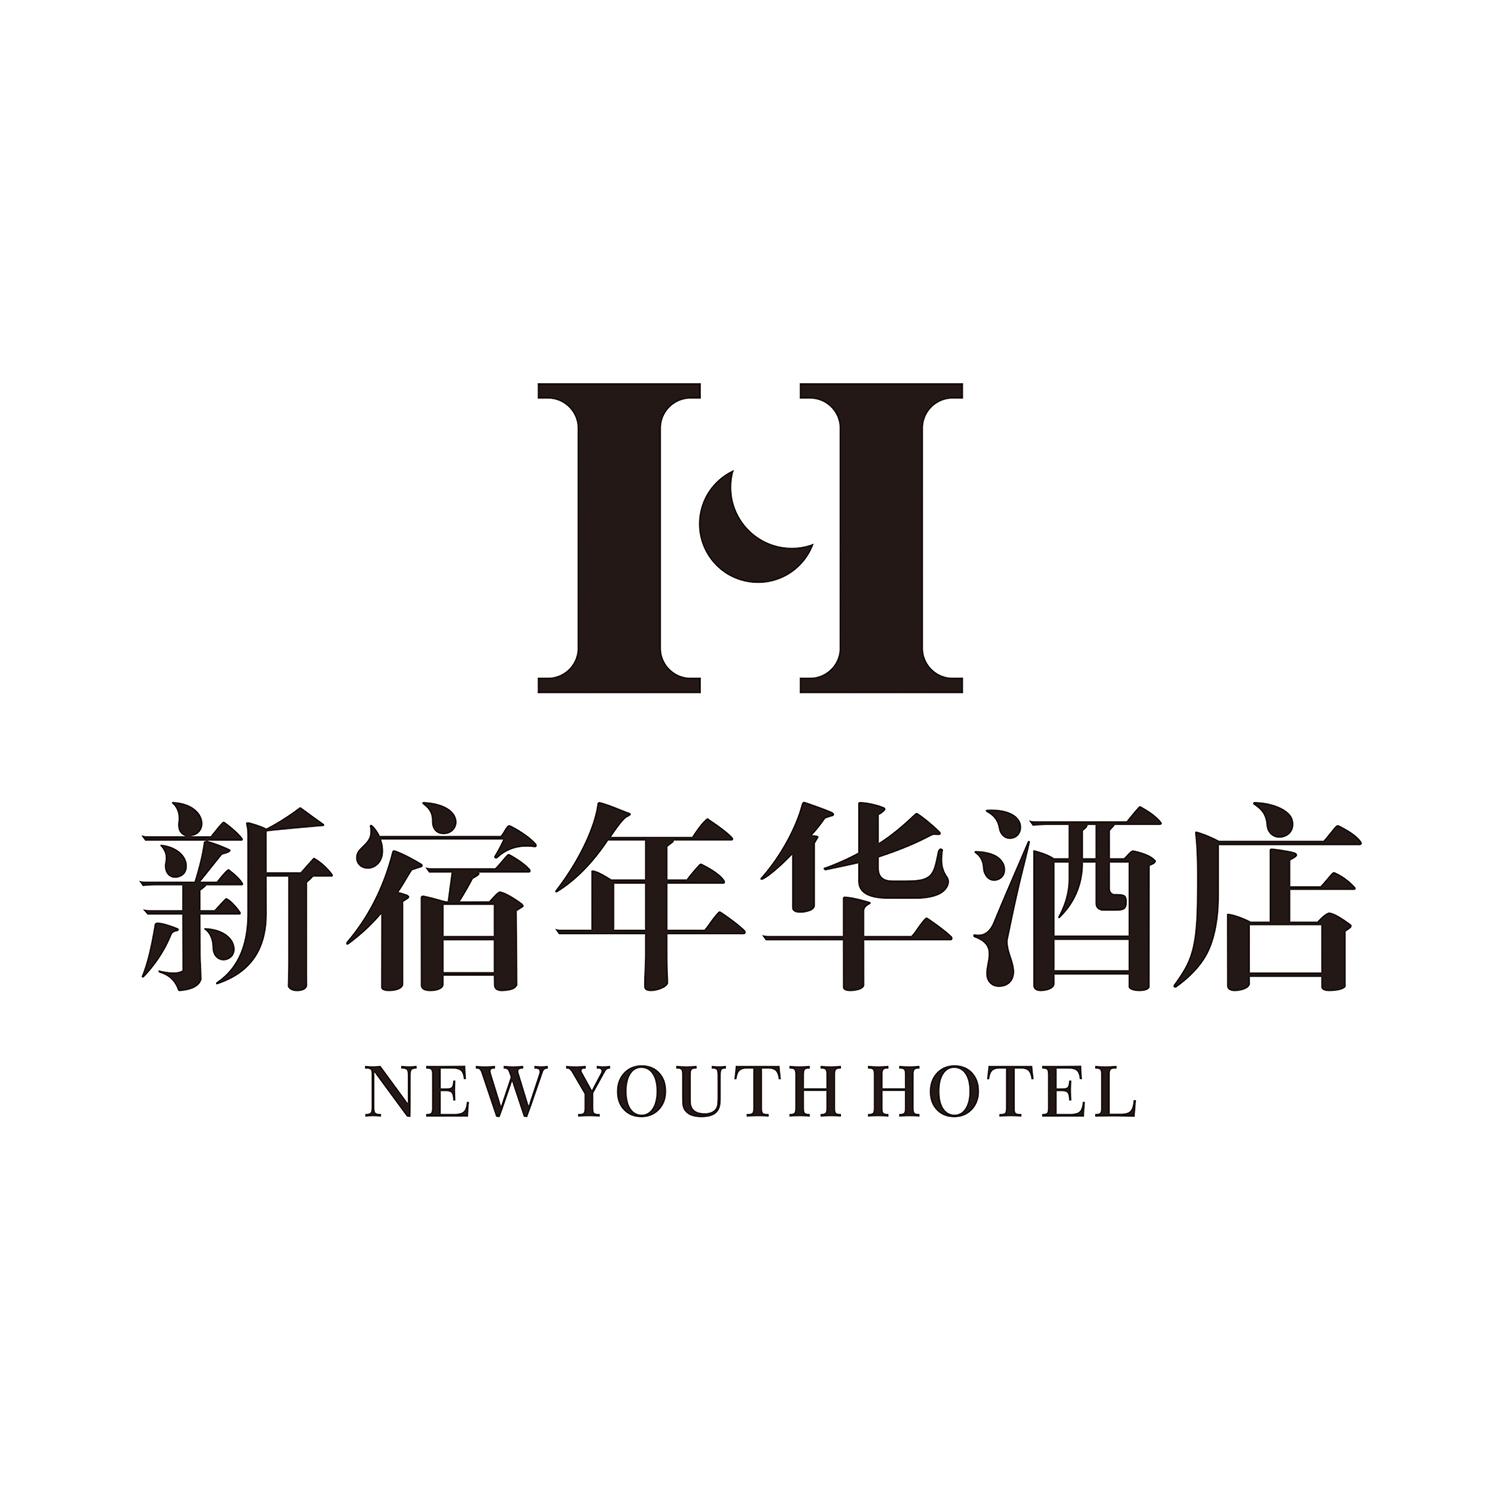 新宿年华酒店  new youth hotel  h 商标公告